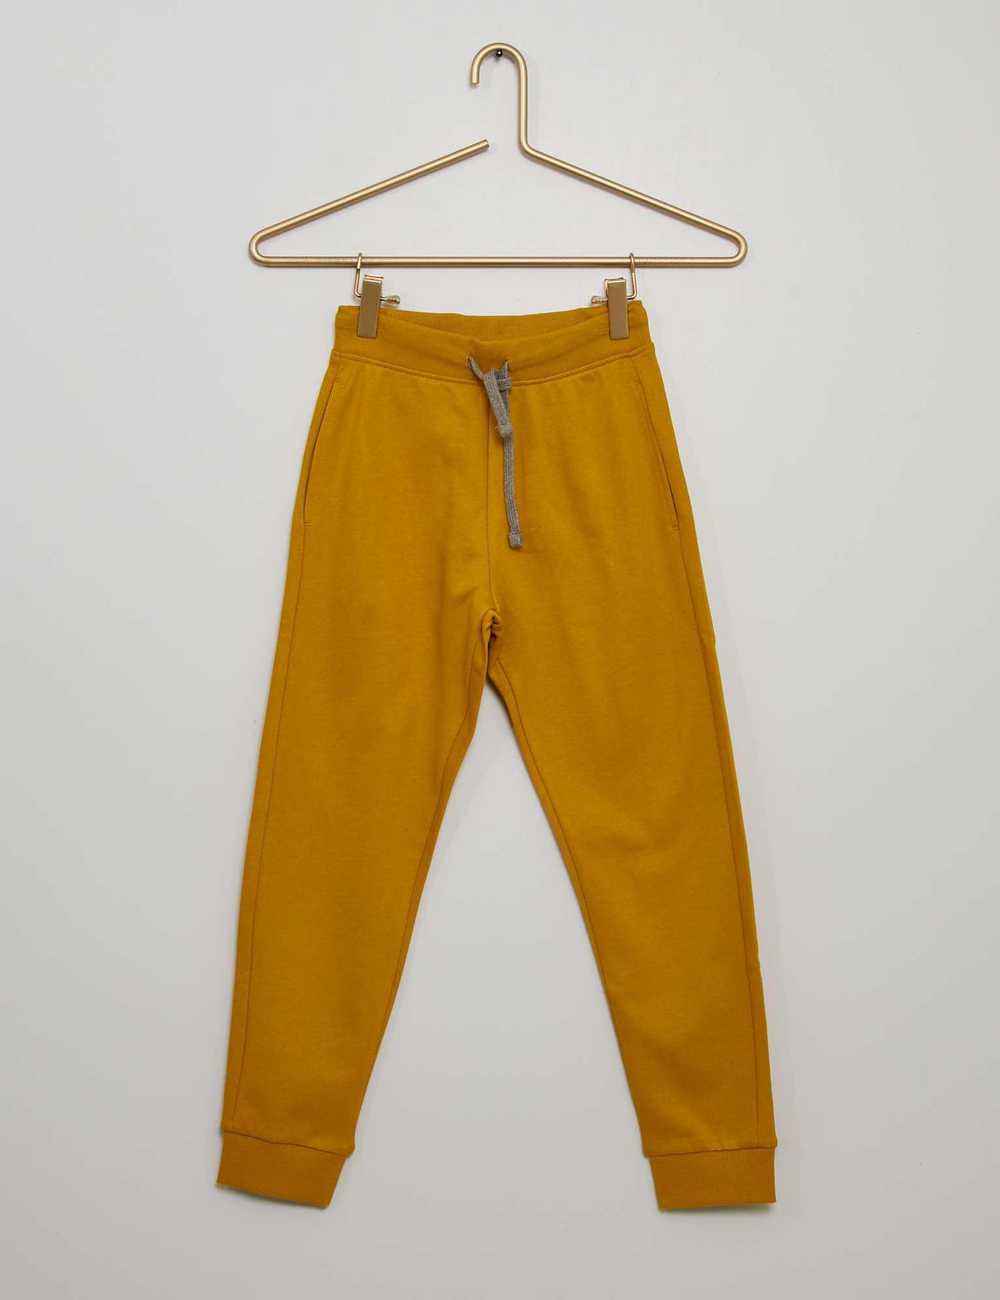 Buy Sweatshirt fabric maternity trousers Online in Dubai & the UAE